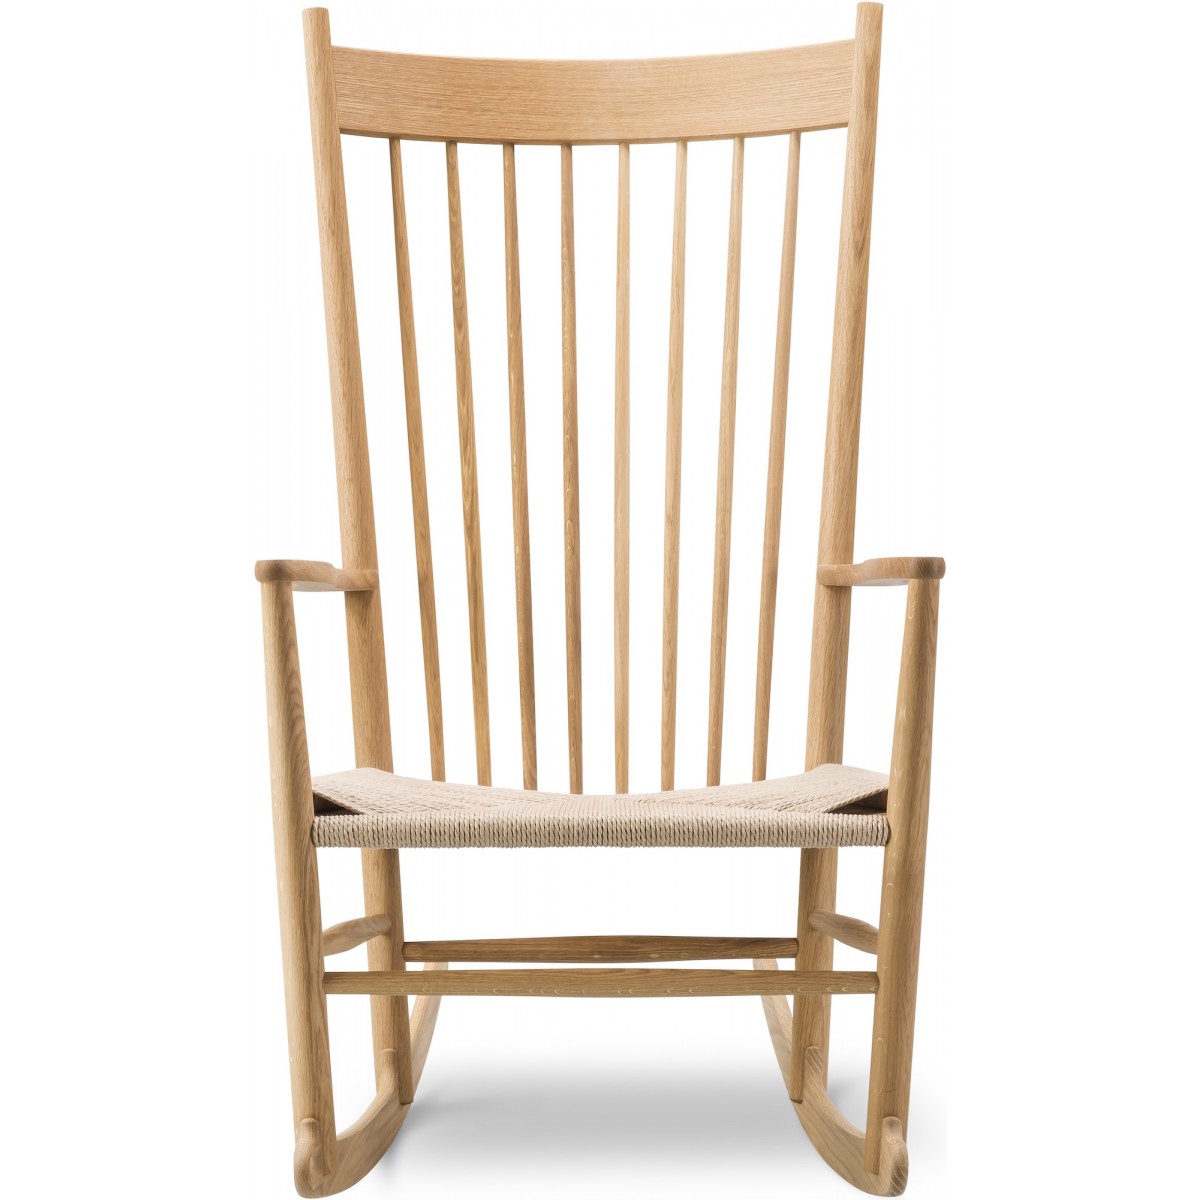 Oiled oak – J16 Rocking chair